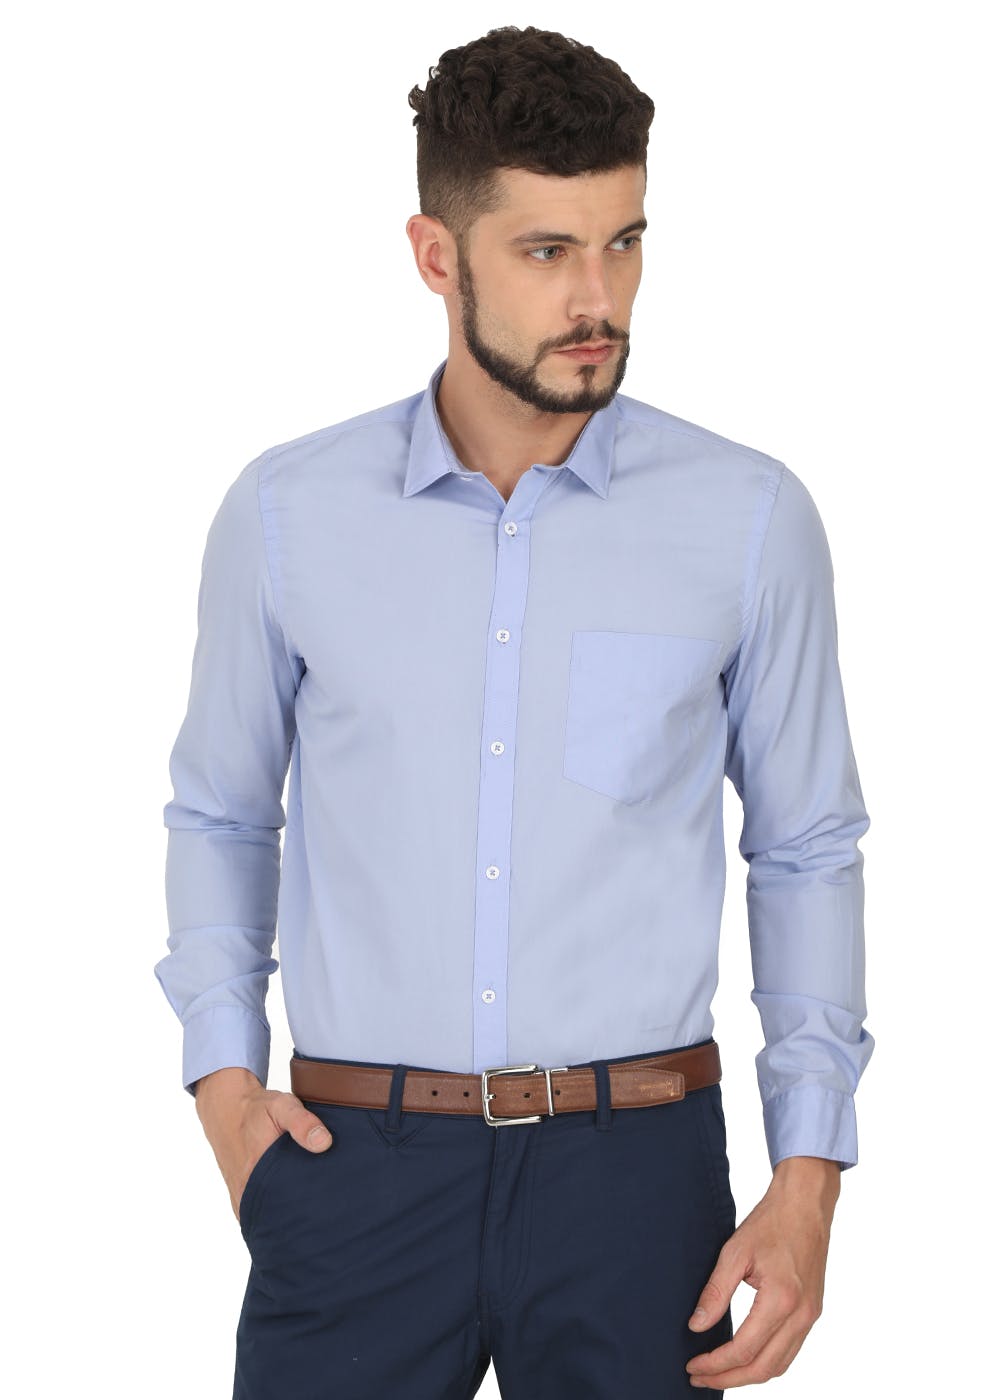 Get Solid Full Sleeves Formal Shirt at ₹ 599 | LBB Shop